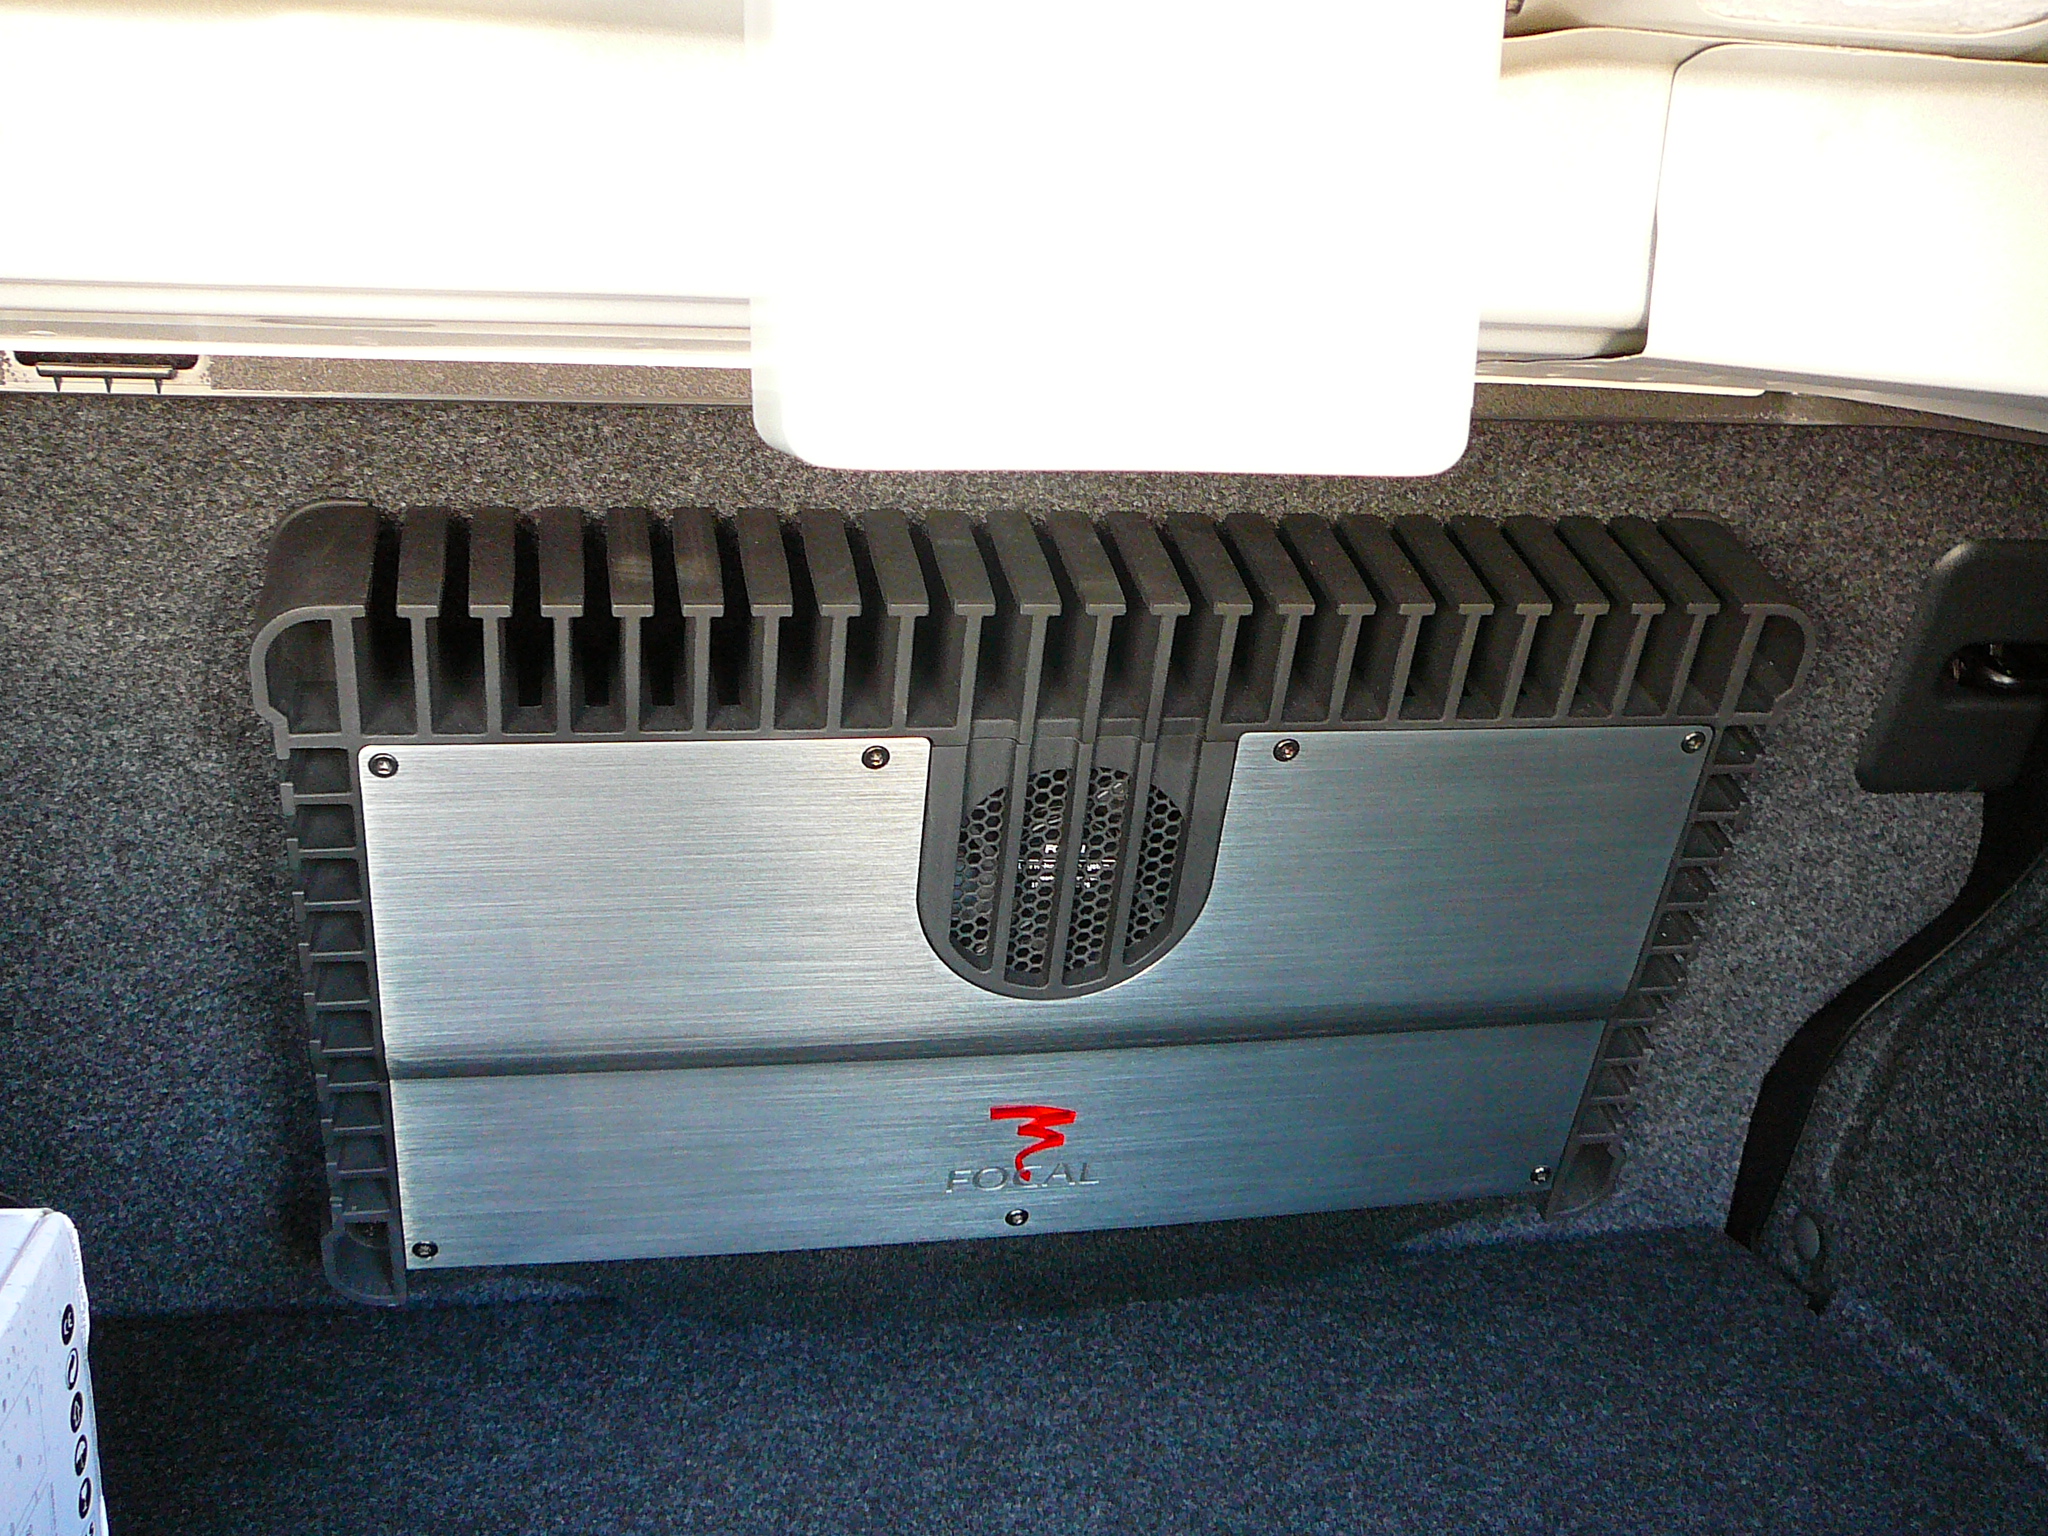 Subaru WRX STI 2011, Focal amplifier and dash mounted bass controller